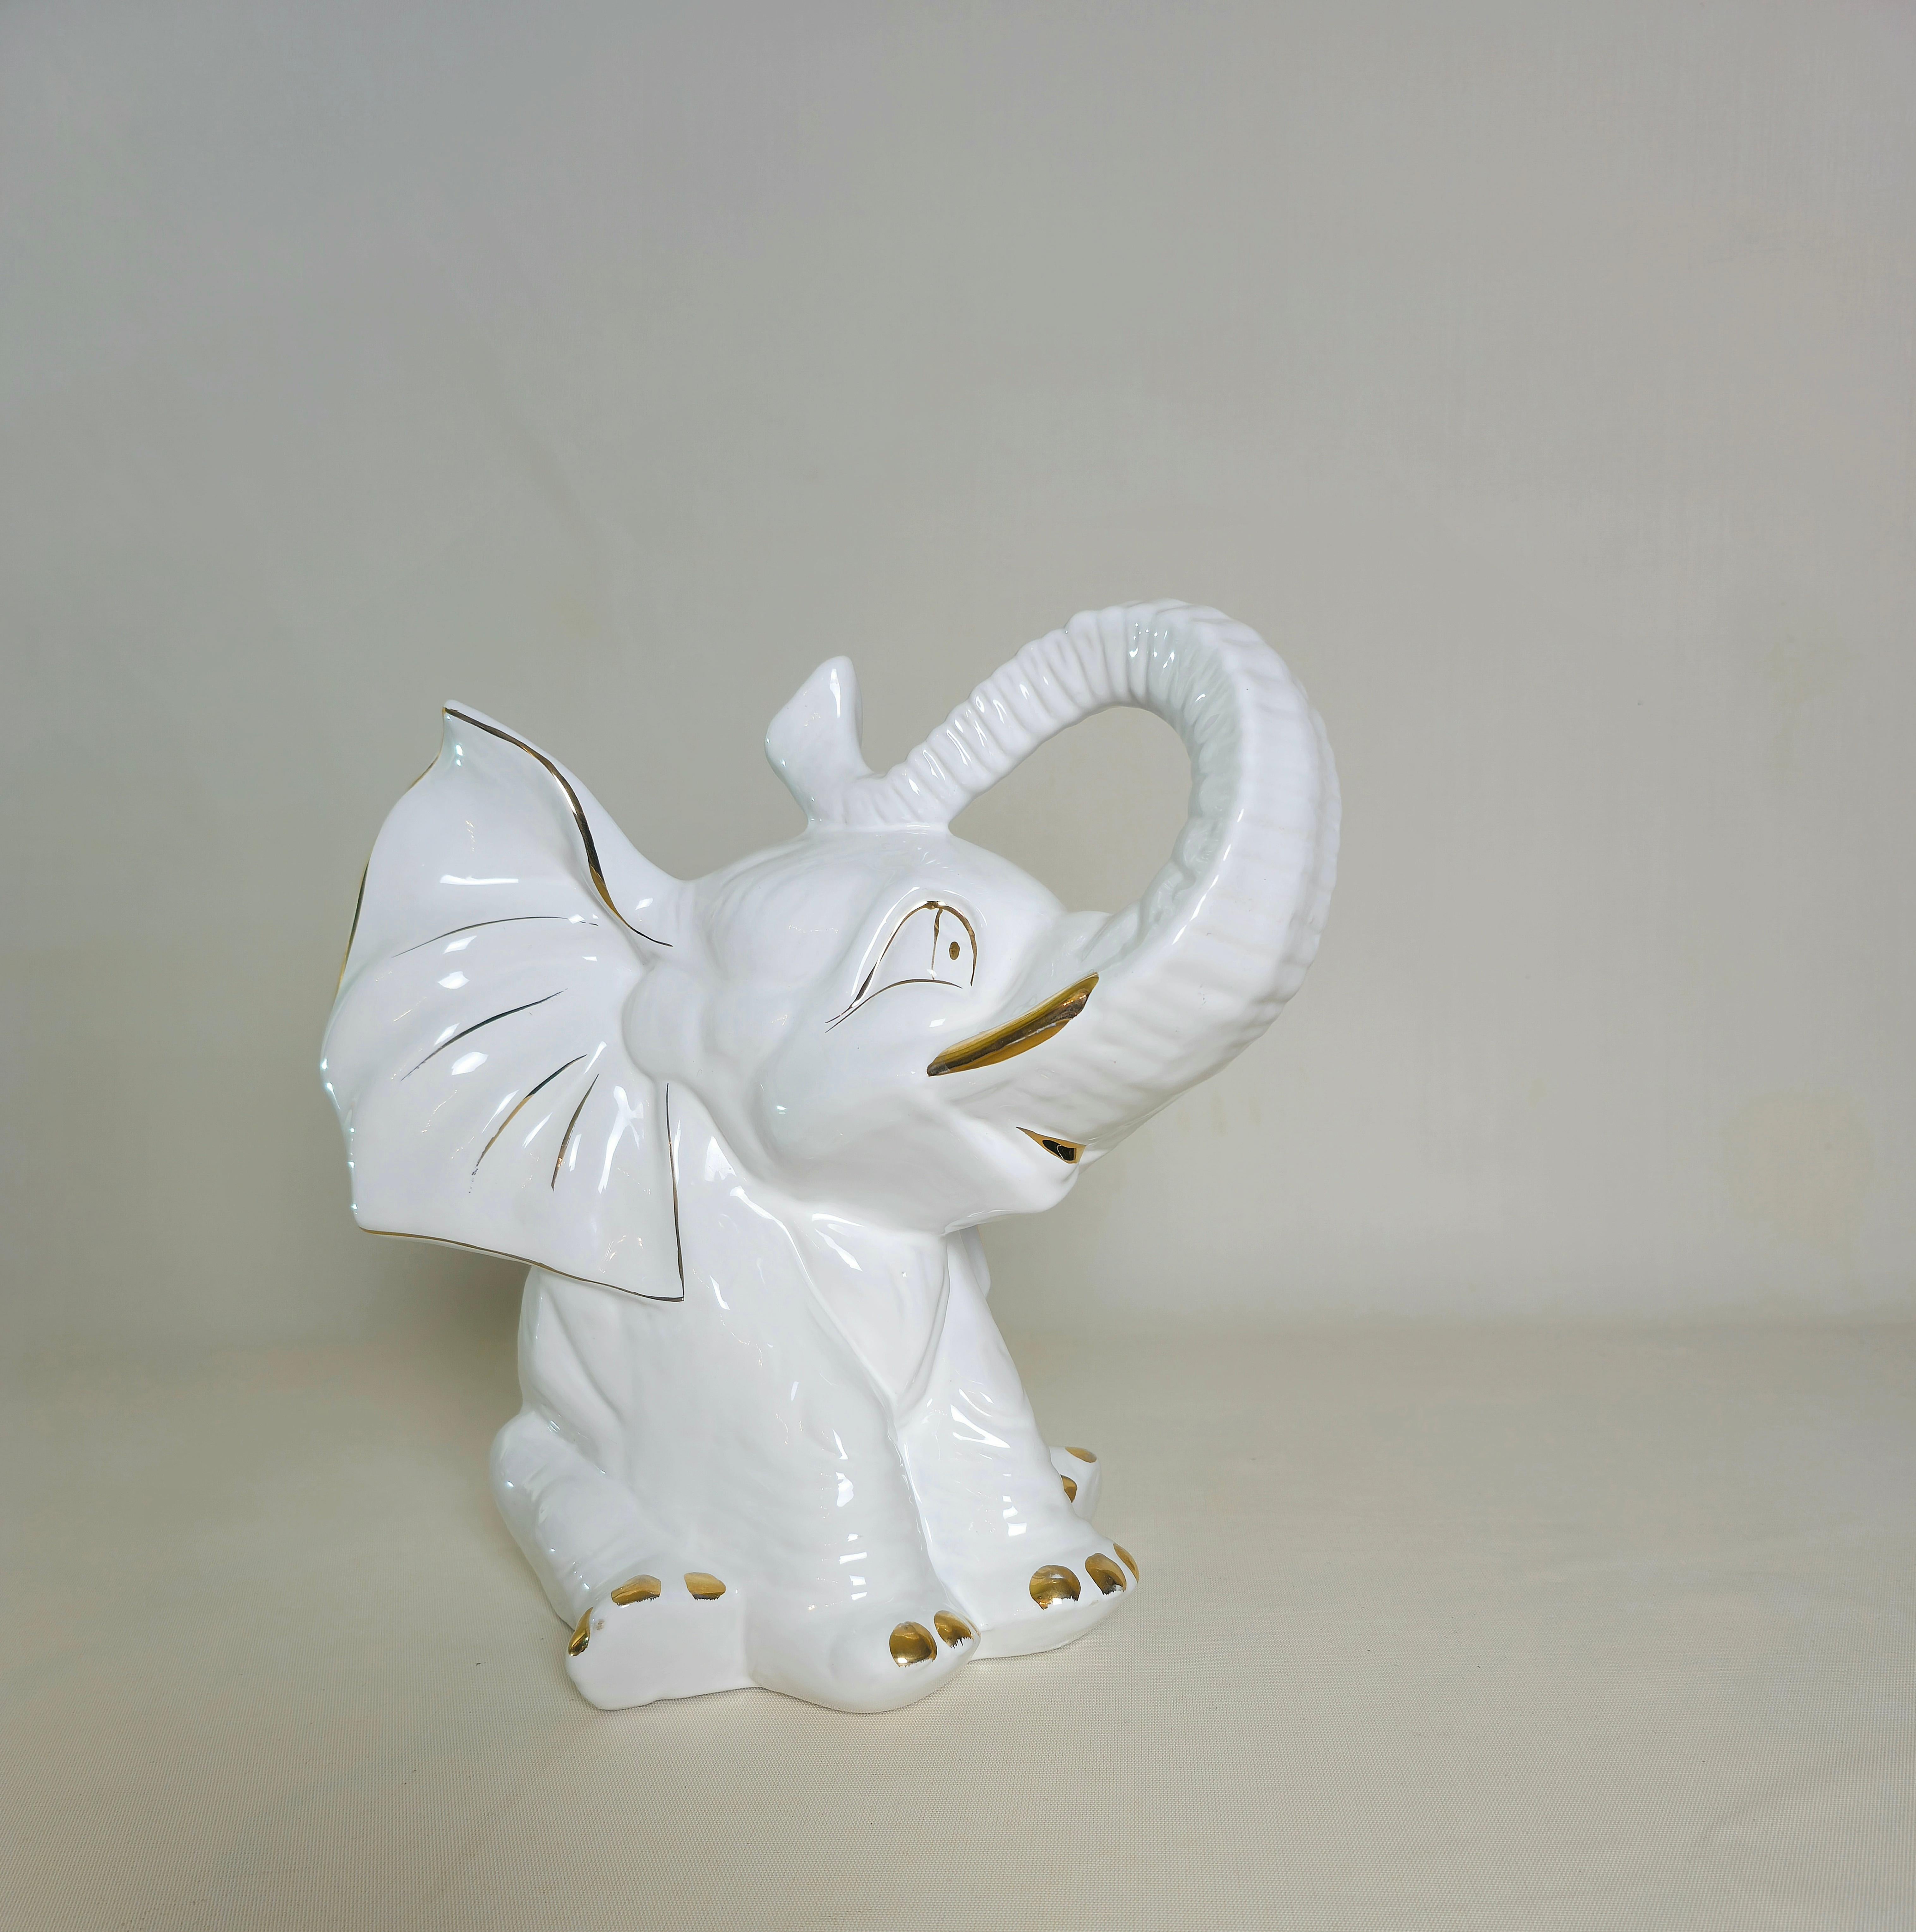 Decorative Object Elephant Porcelain Midcentury Modern Italian Design 1970s For Sale 4